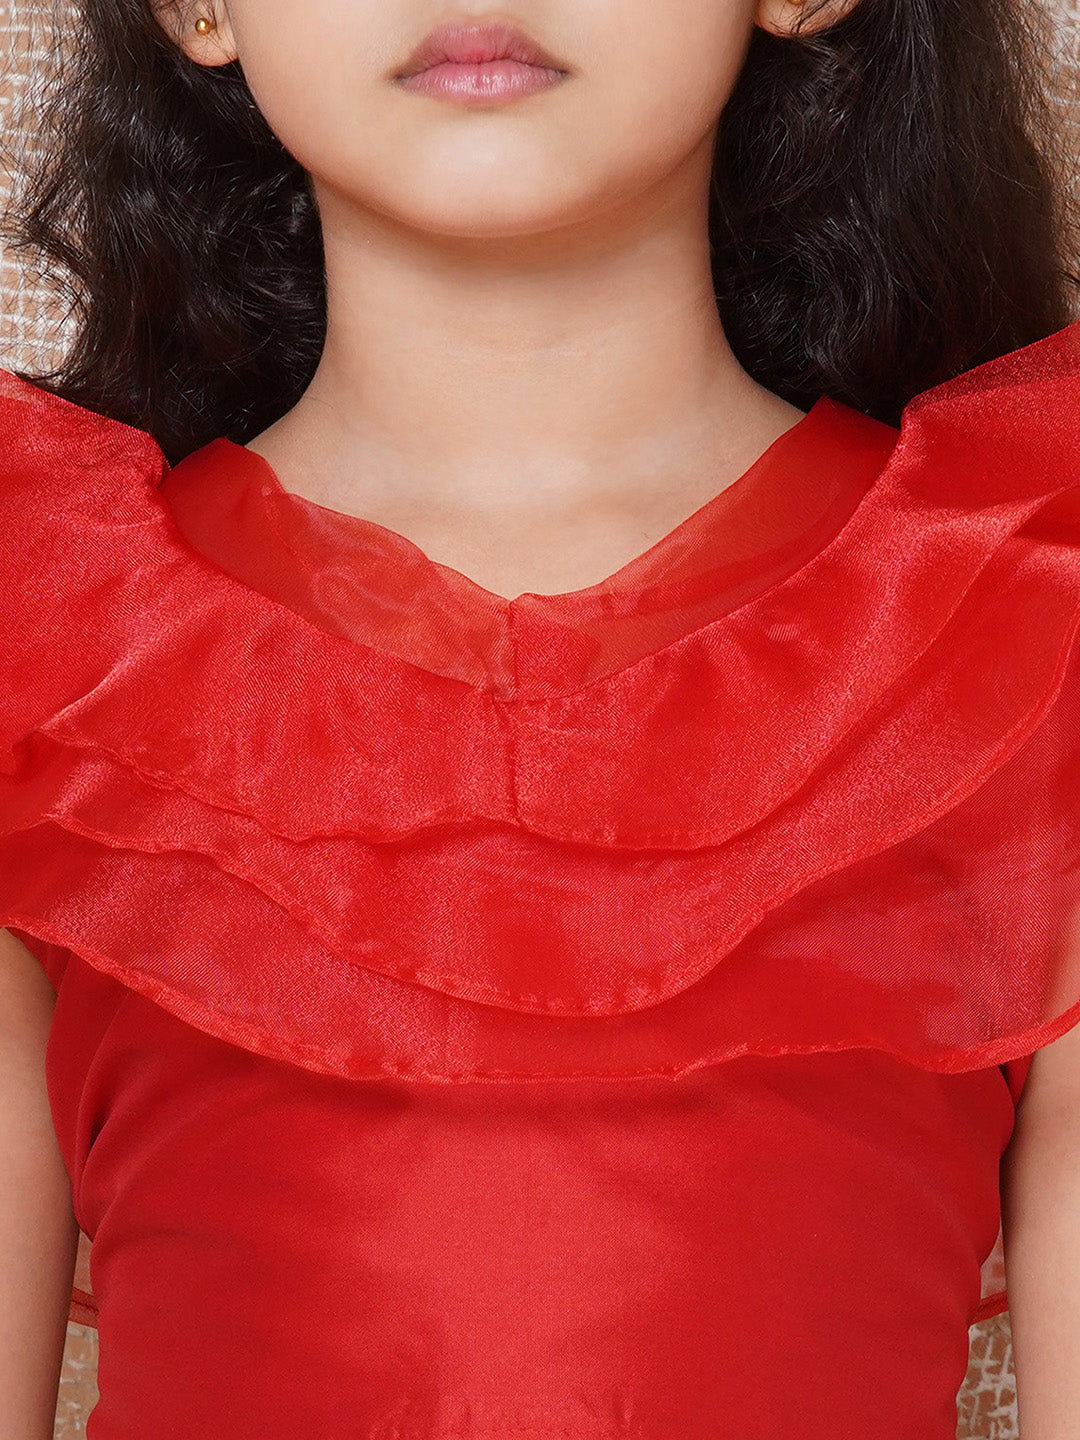 Girls Cotton Woven Design Print Sleeveless Red Lehenga Choli Set